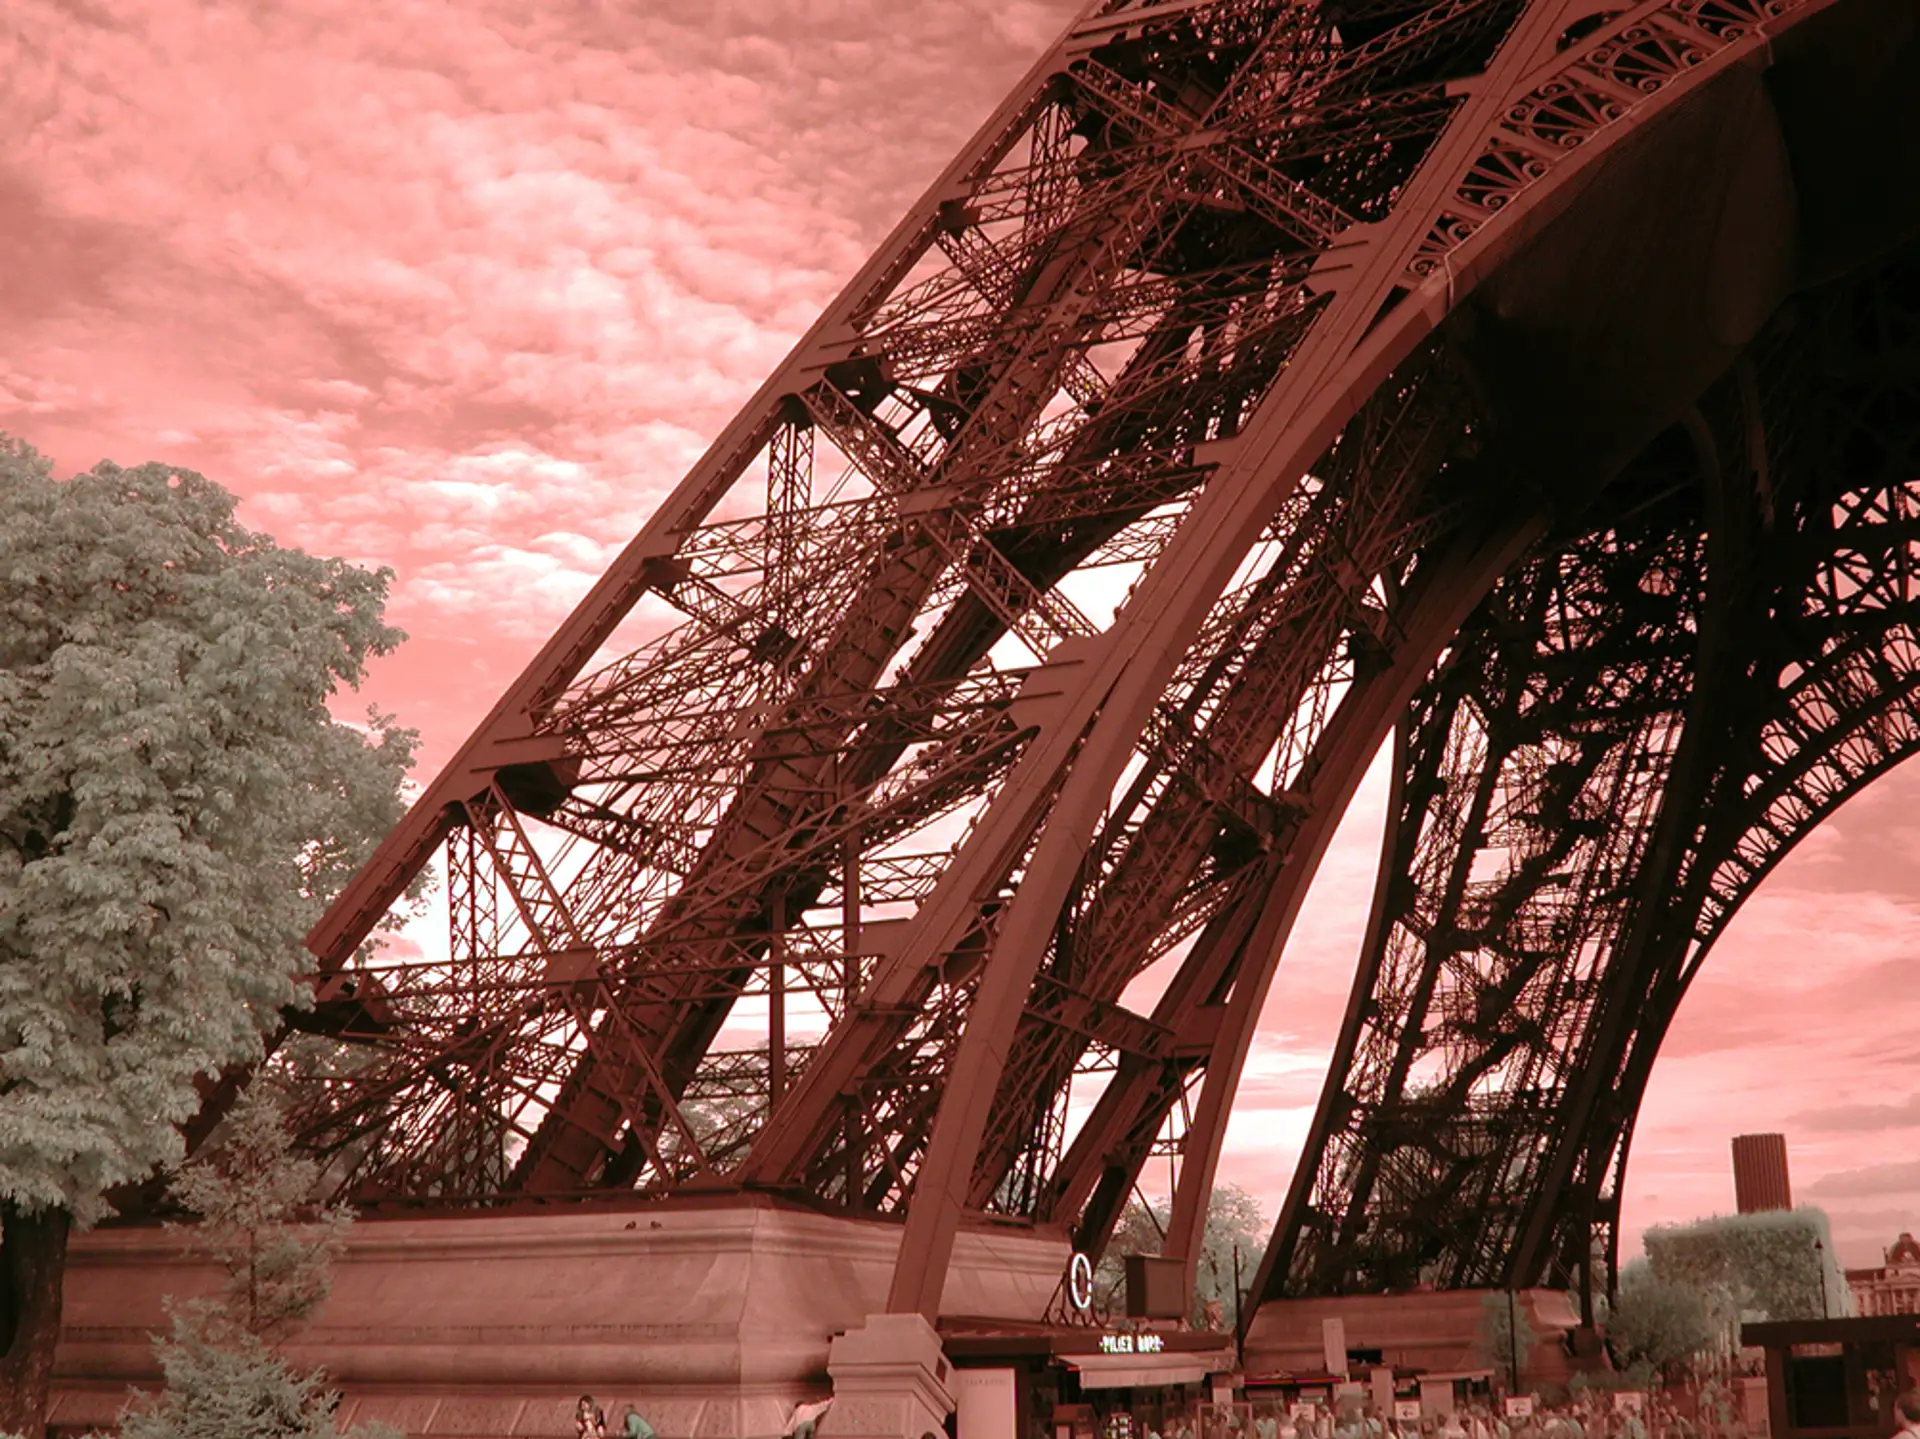 Leg of tthe Eiffel Tower